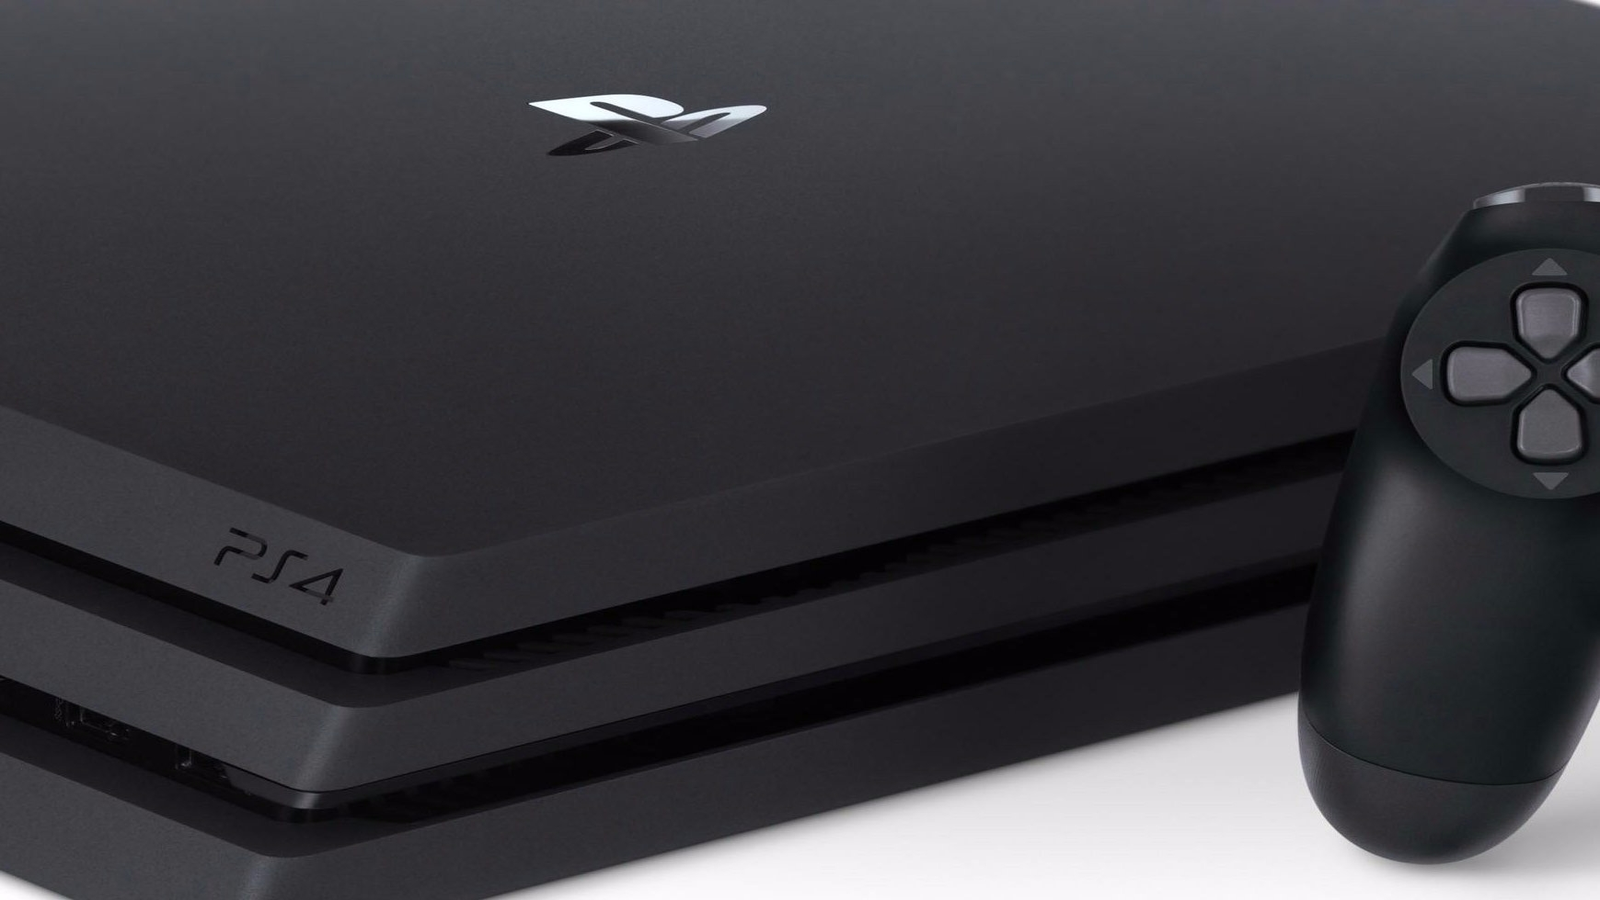 Sony PS4 Pro vs. PlayStation 4 Slim: Worth the Upgrade?